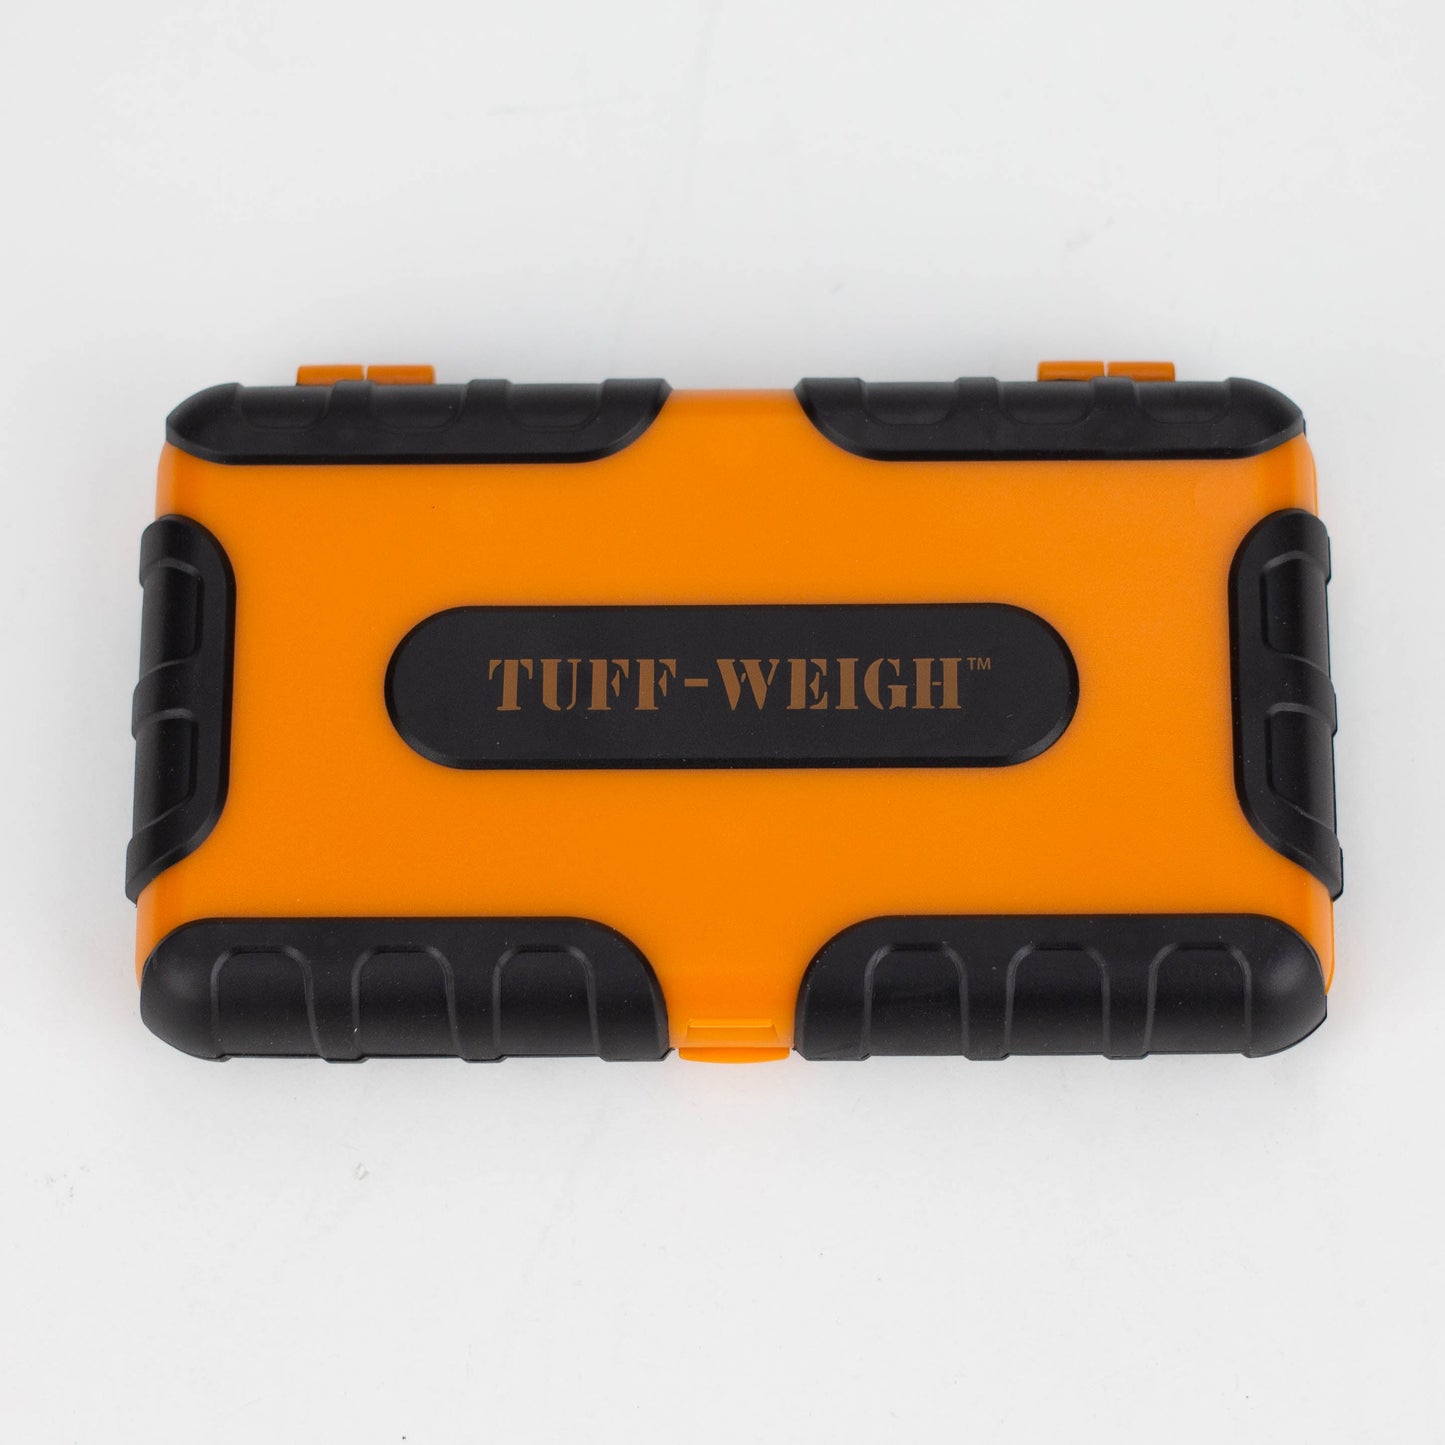 Truweigh | Tuff-Weigh Scale - 200g x 0.01g_5